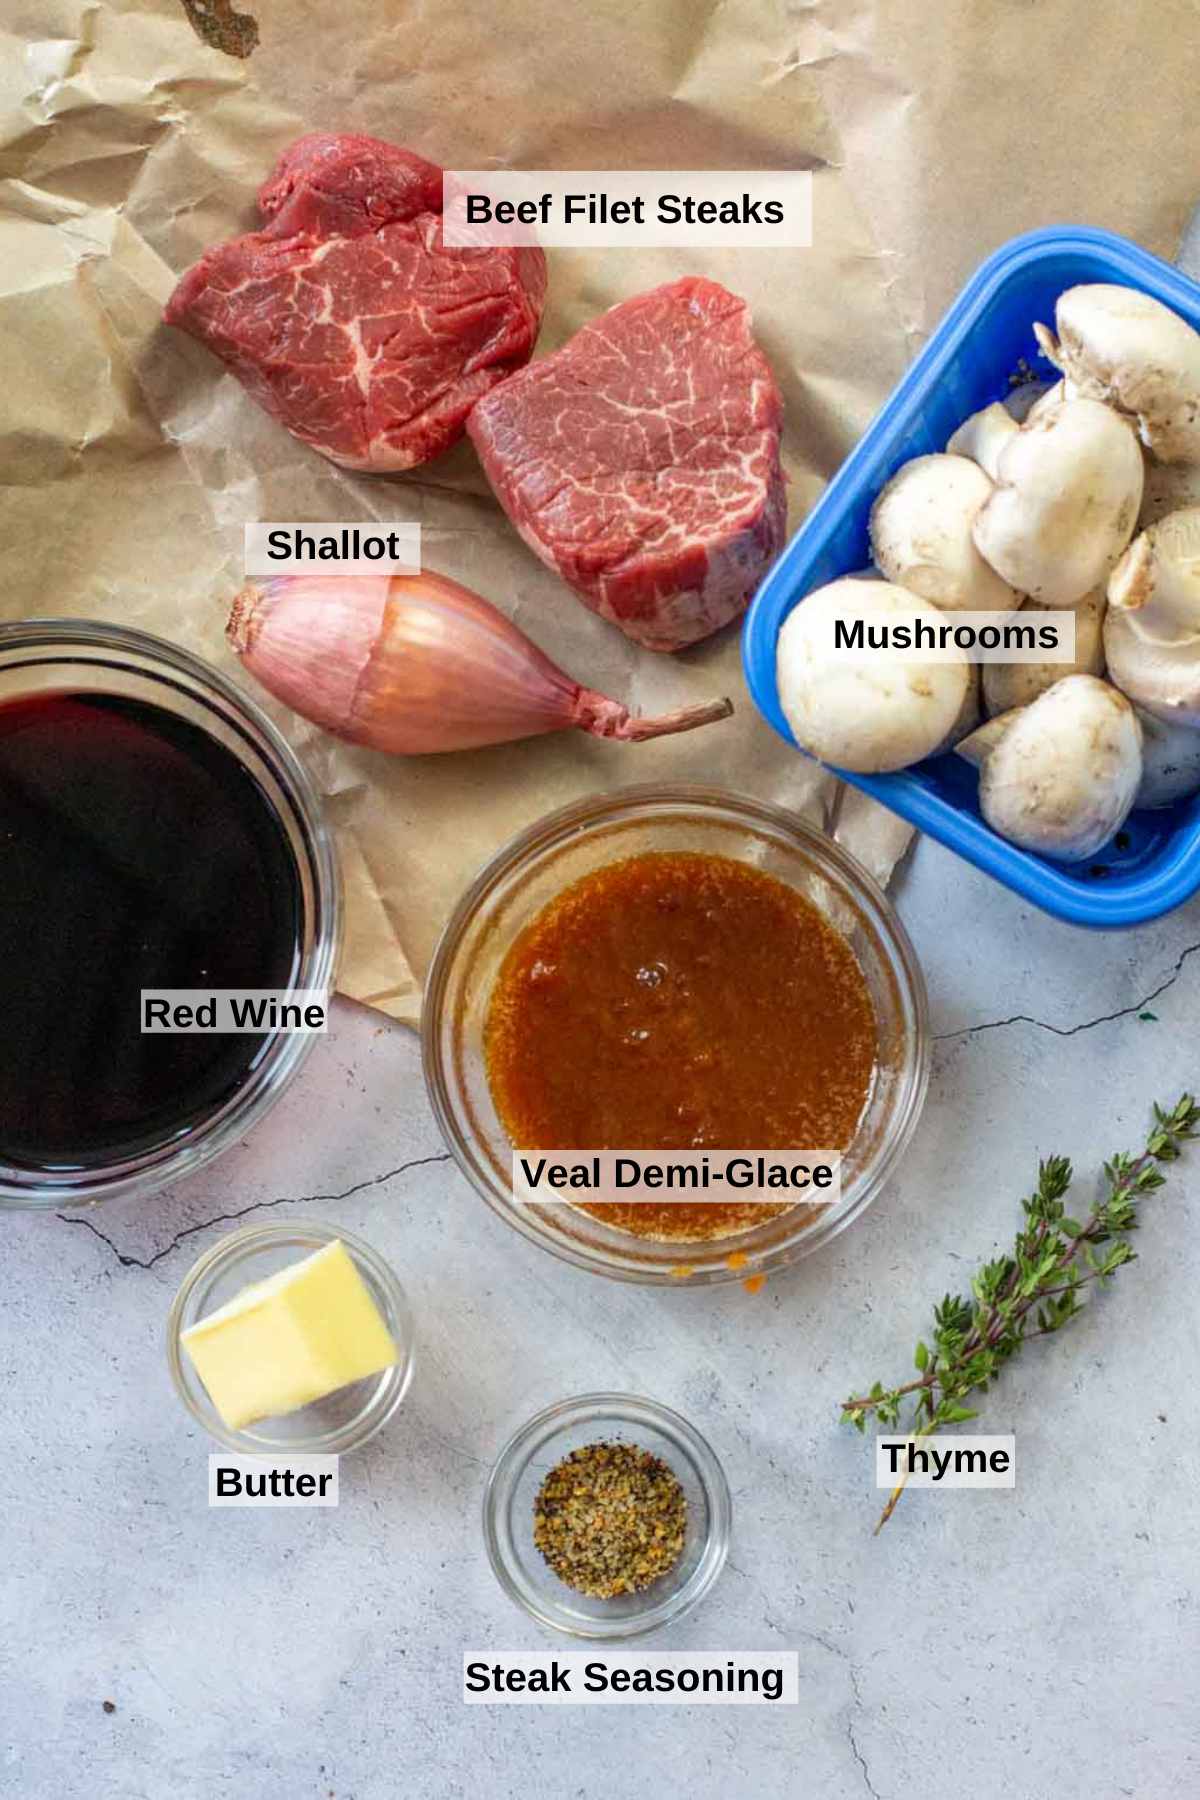 Ingredinets to make beef tournados with mushroom red wine sauce.